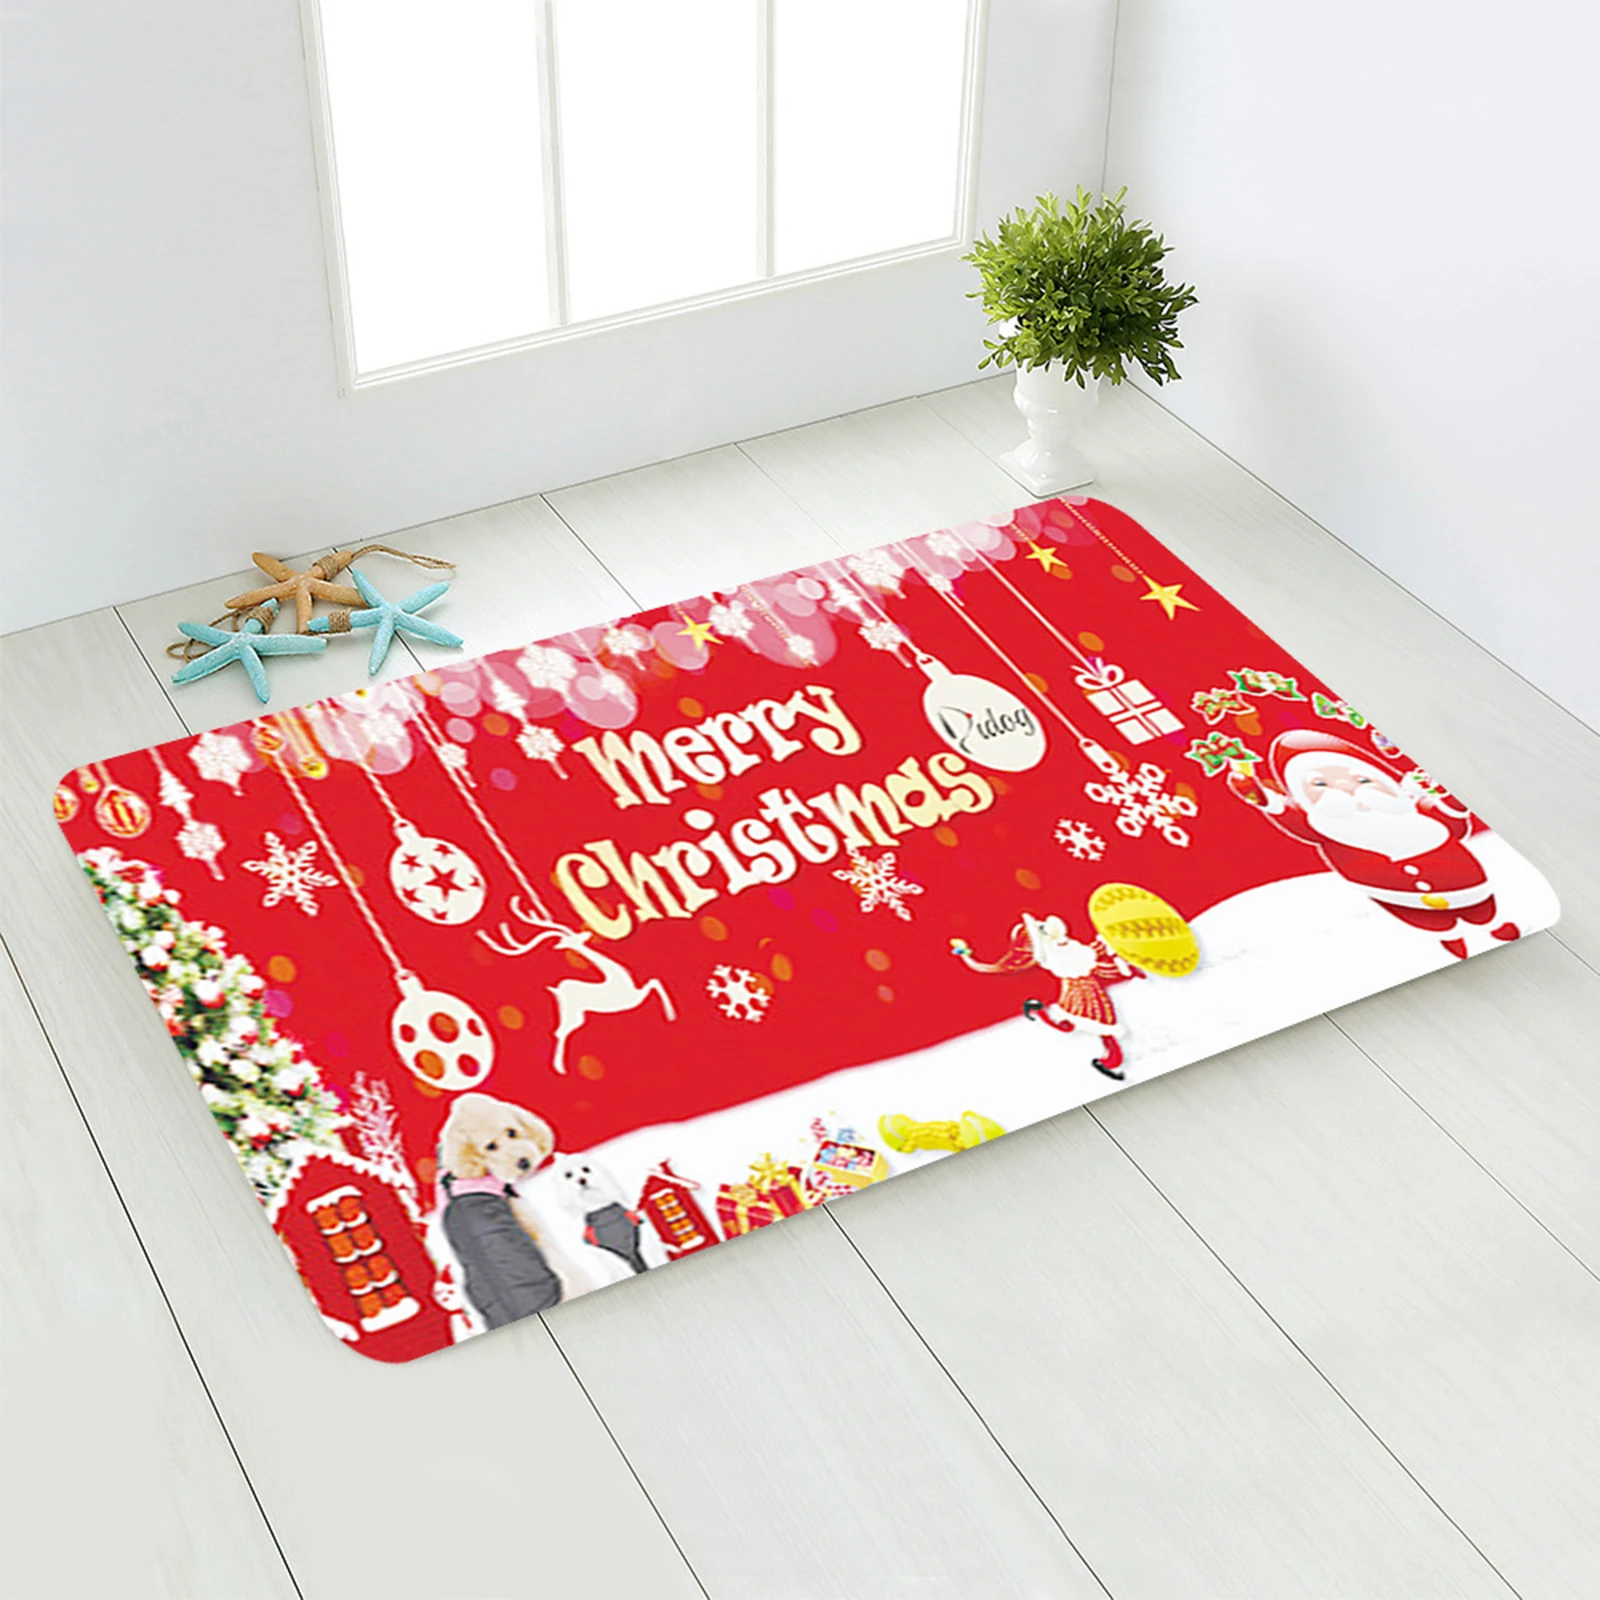 Rug Festive Santa Claus Elk Non Slip Absorbent Reusable for Christmas Day Bedroom Living Room Bath Front Floor Kitchen Hallway